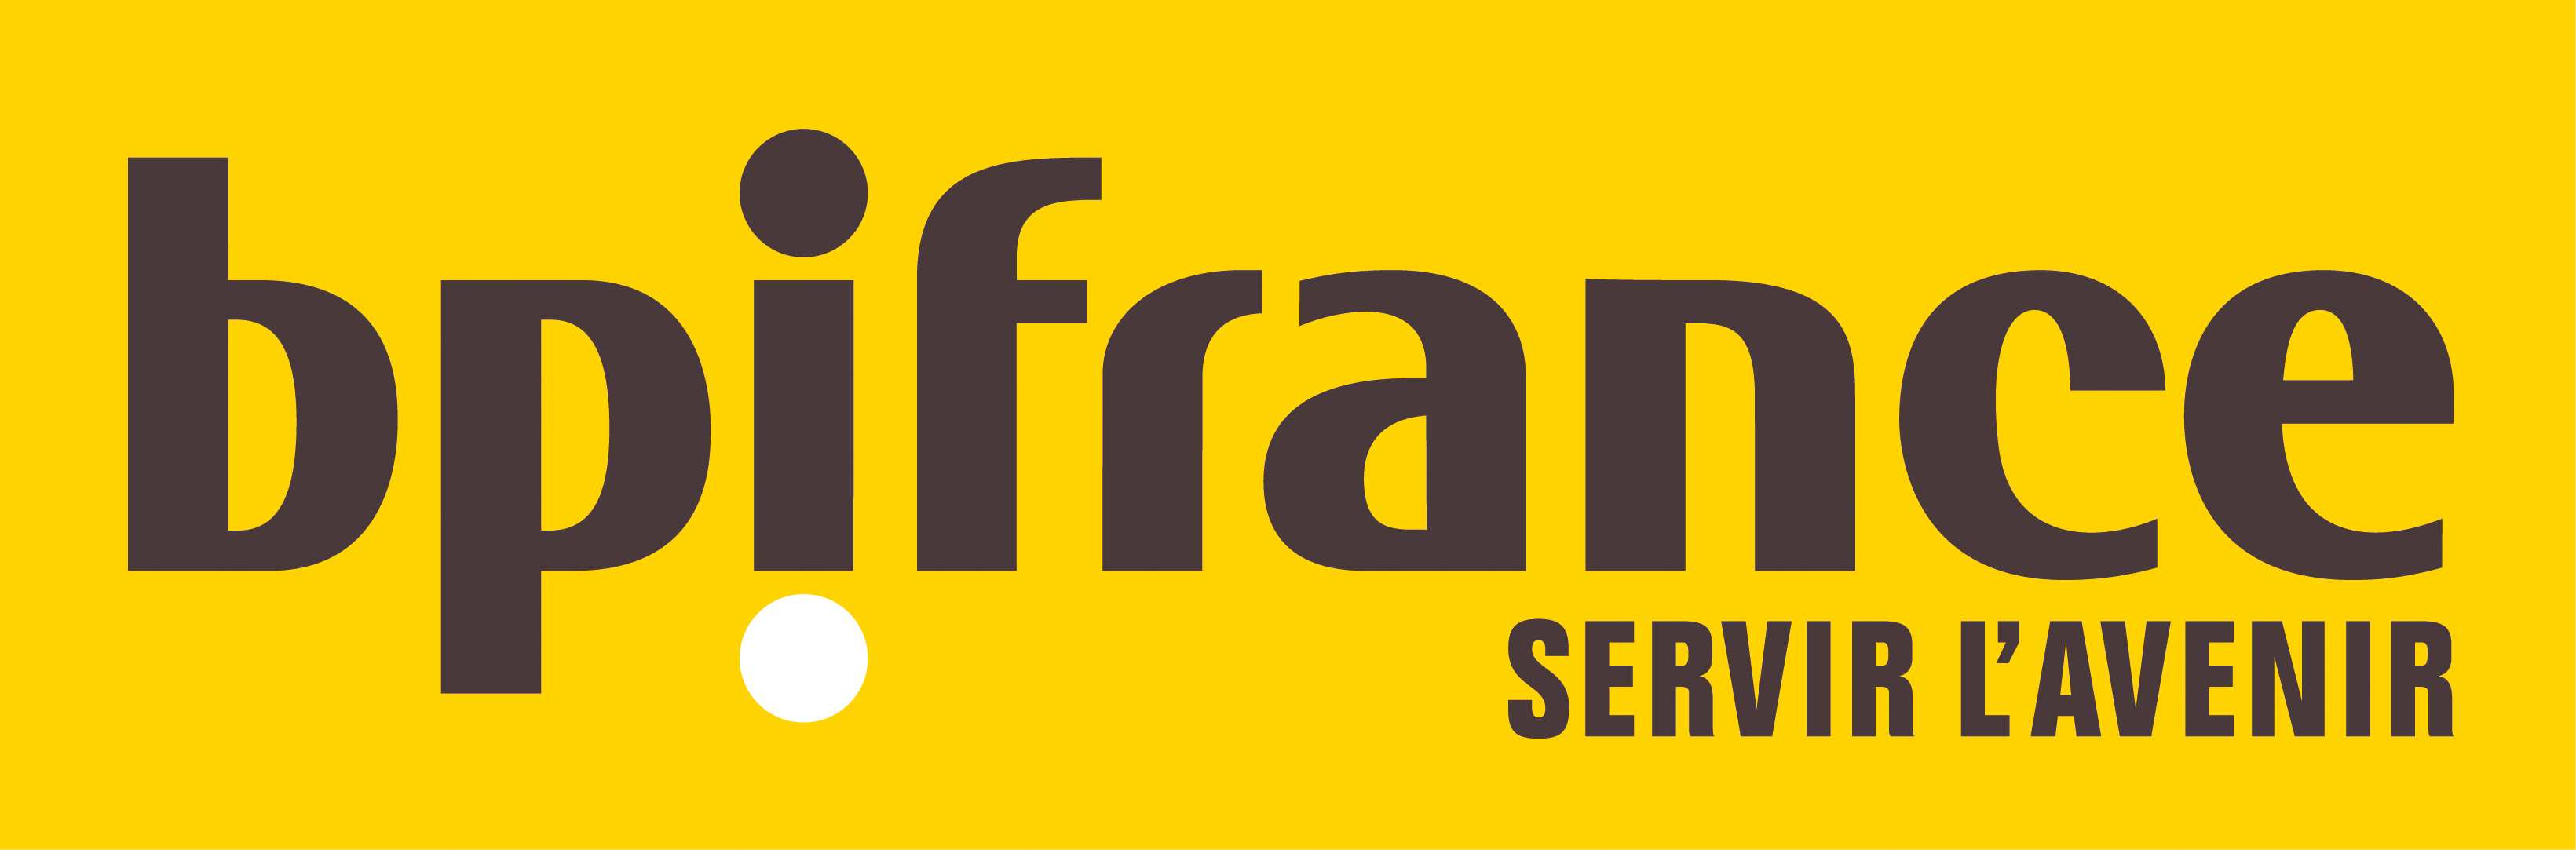 Logo pepite france